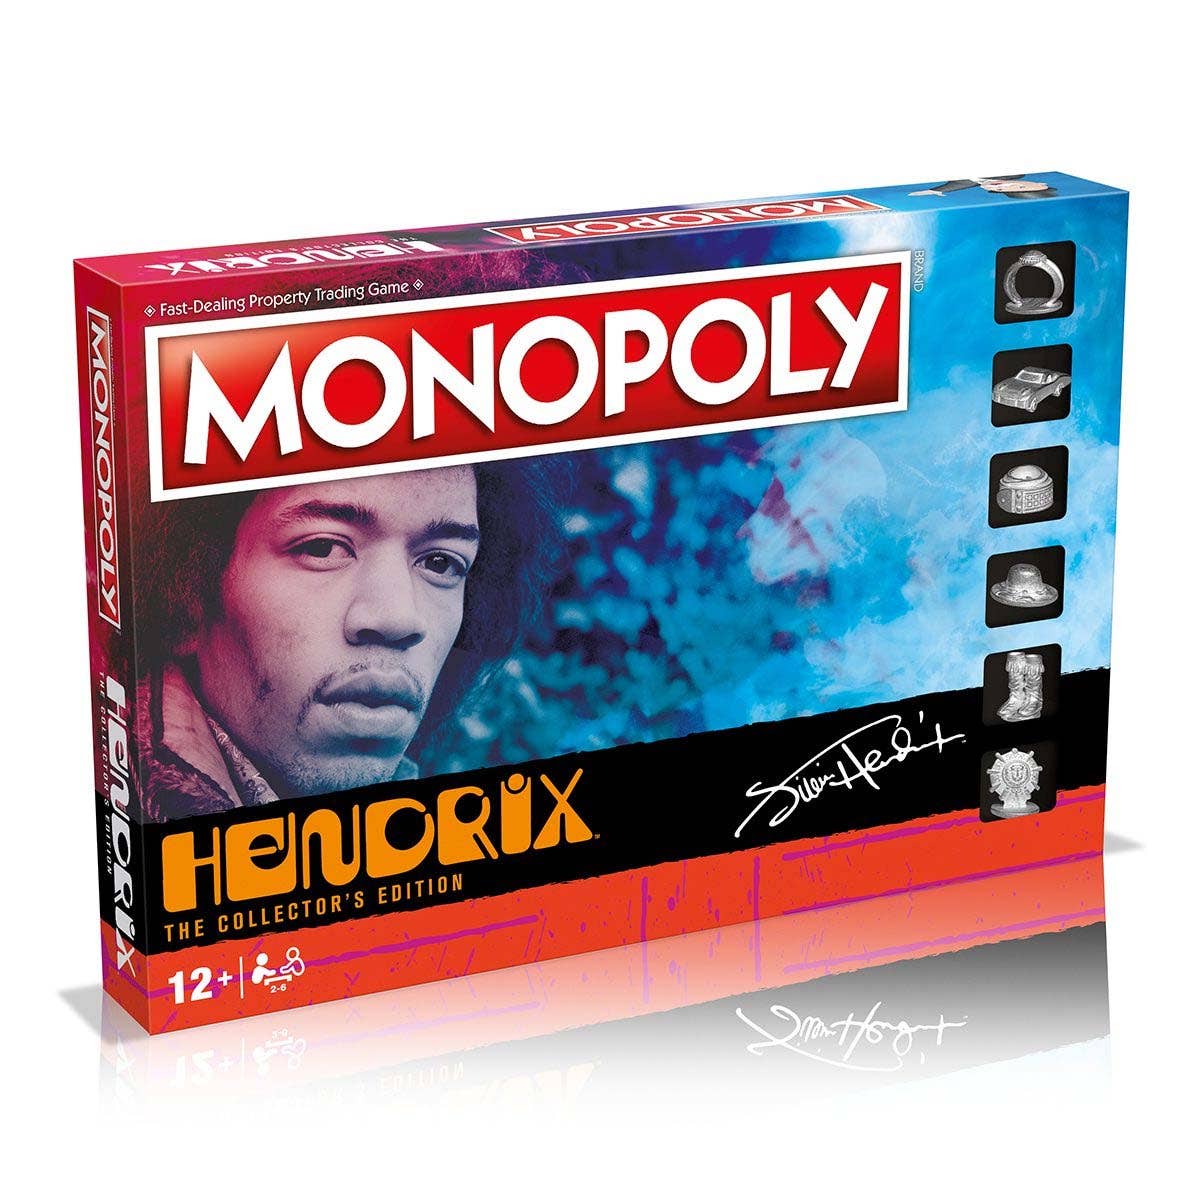 Jimi Hendrix Monopoly